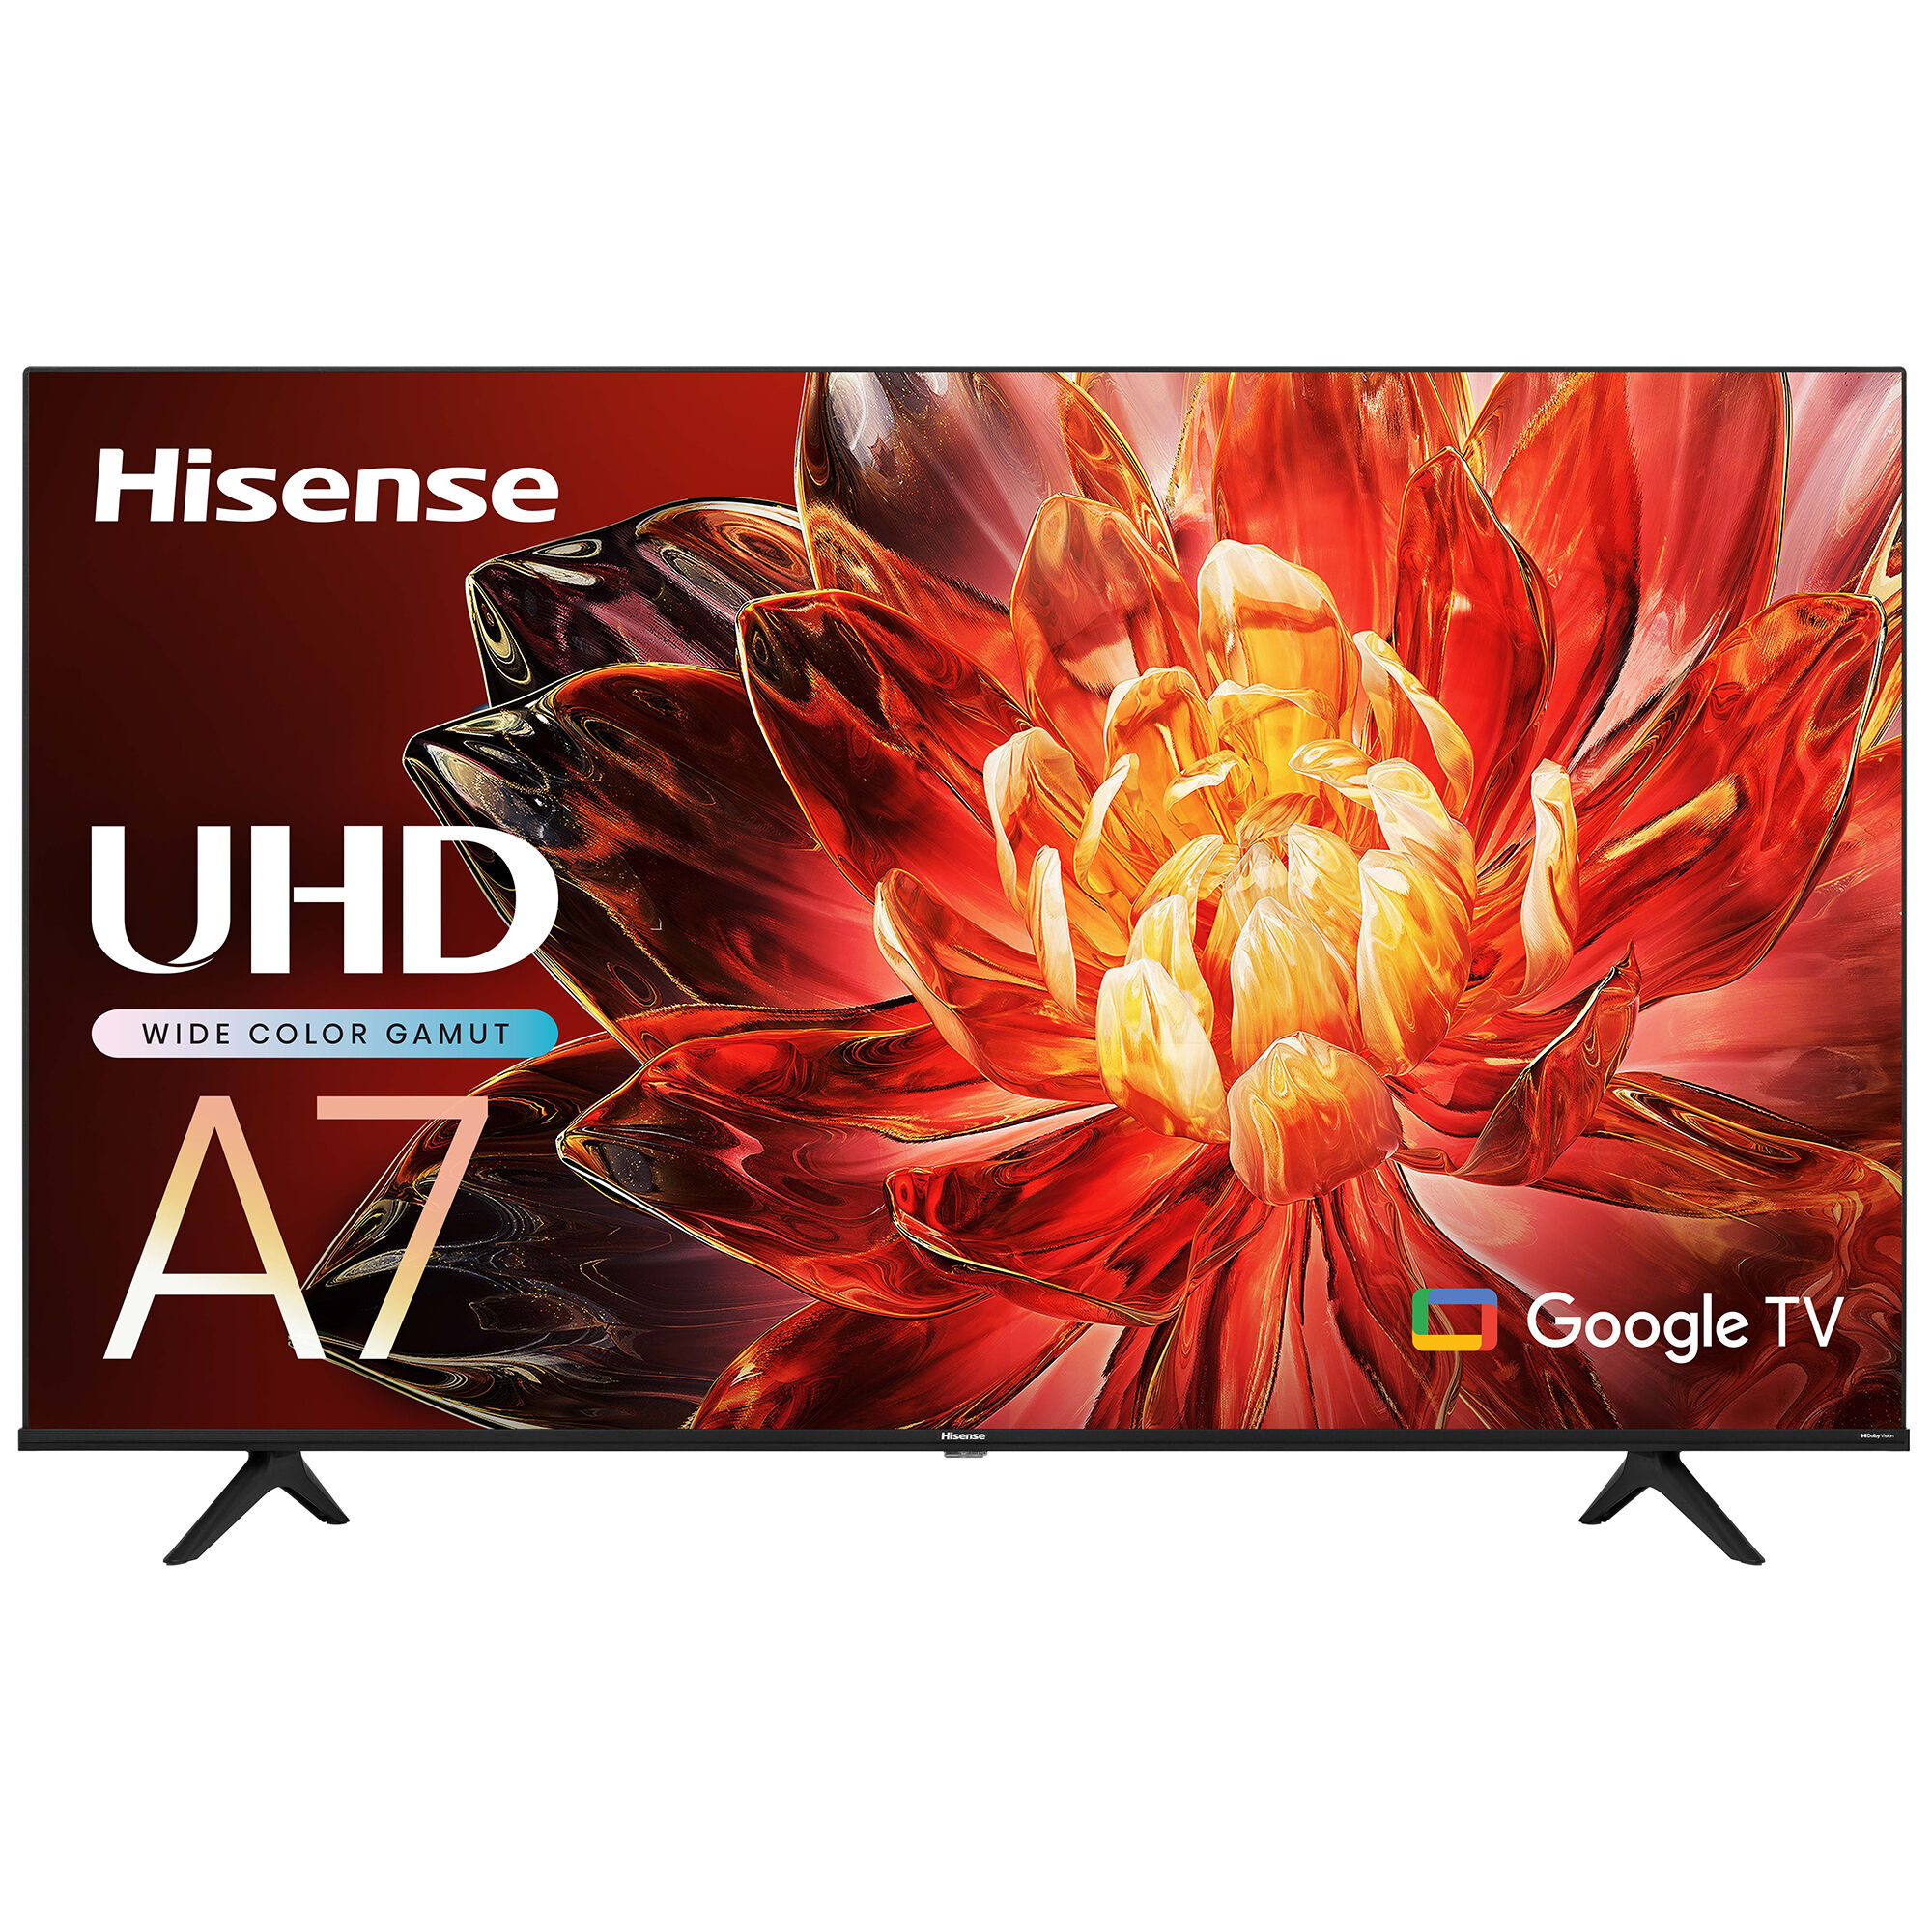 Hisense 43inch Class A7 Series LCD 4K UHD Smart Google TV